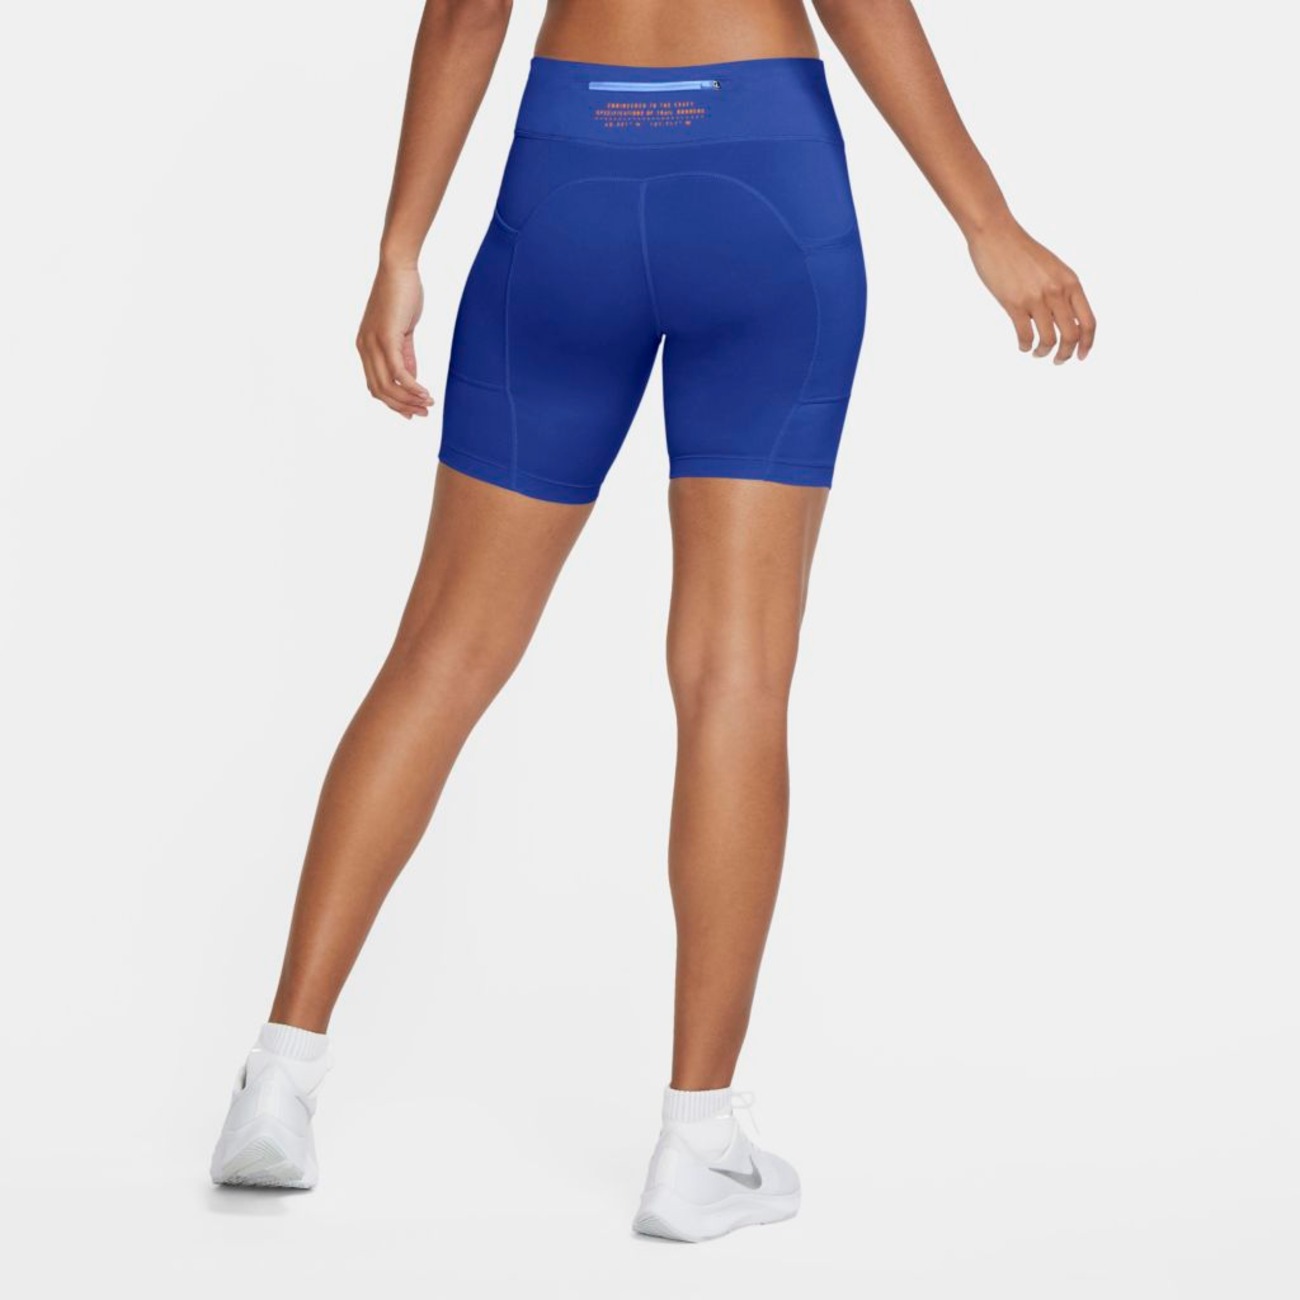 Shorts Nike Fast Feminino - Foto 2